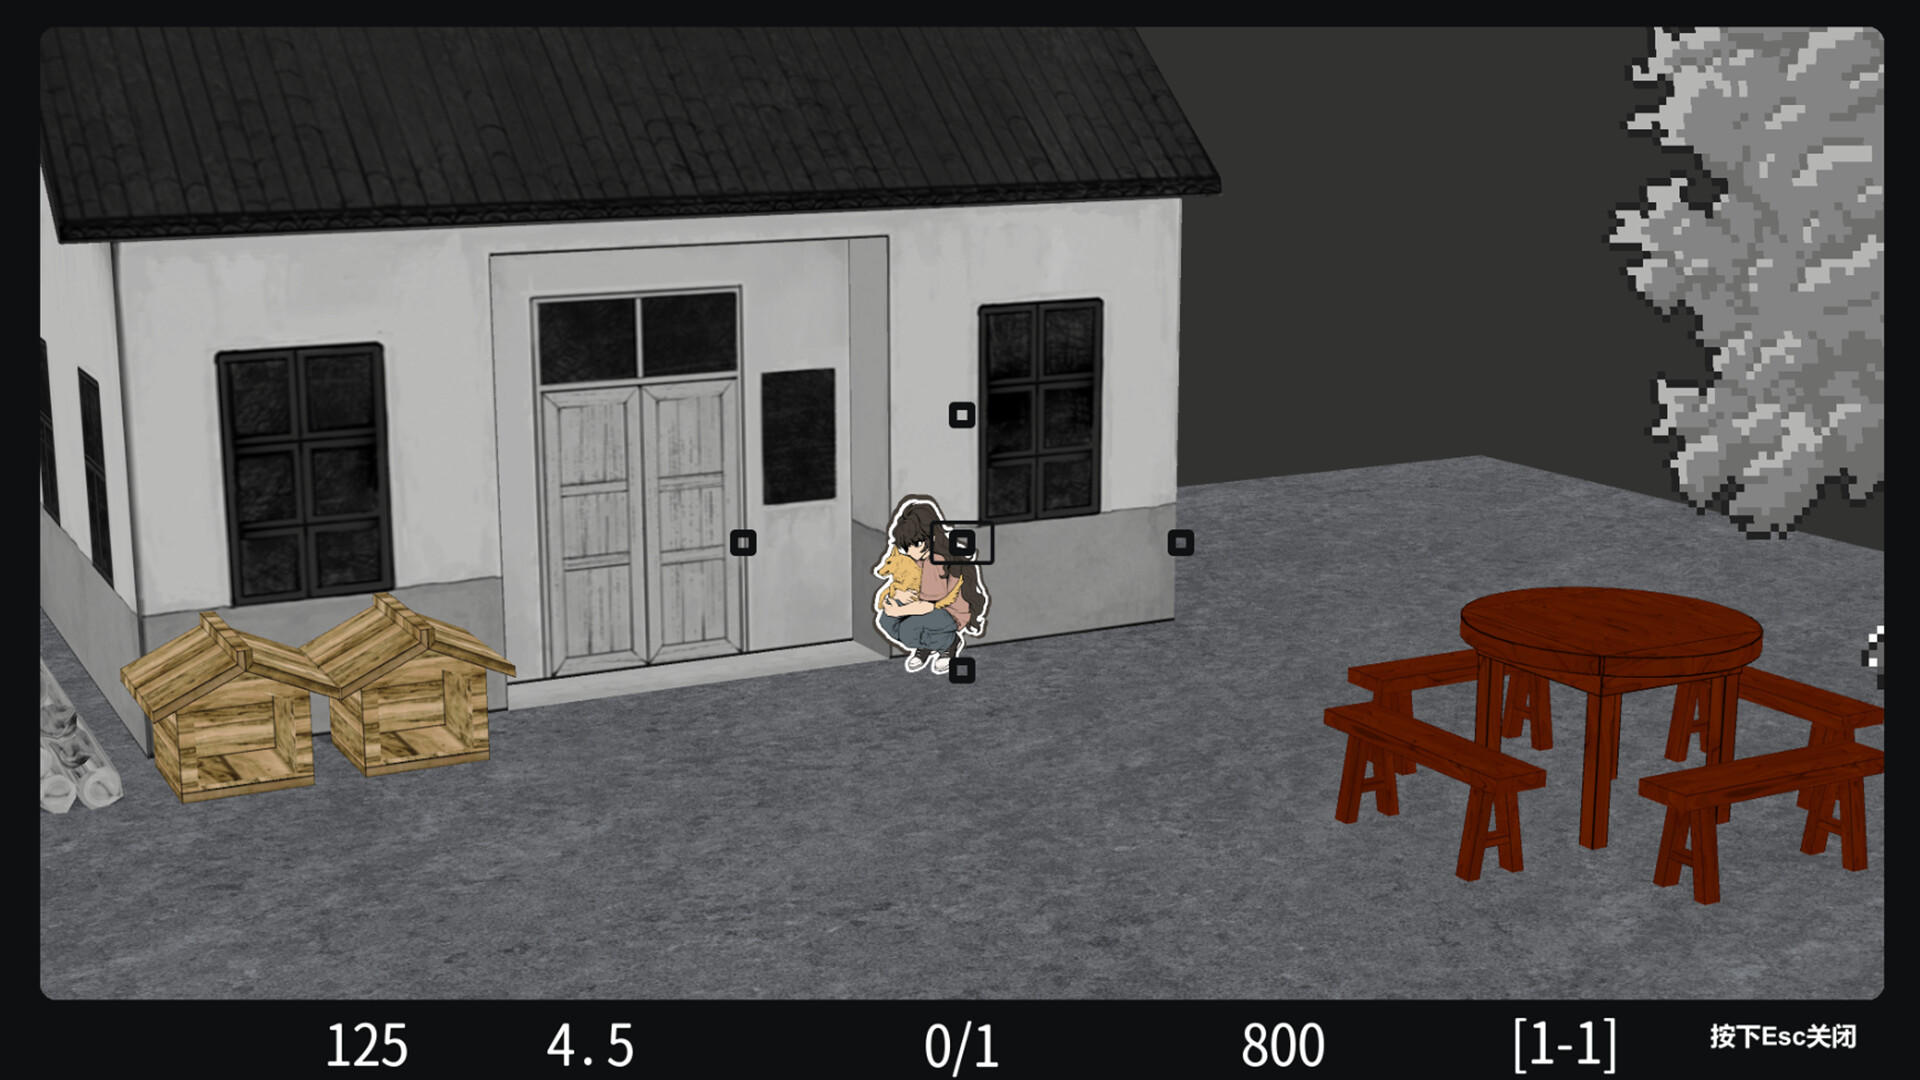 All Doe's Life screenshot game